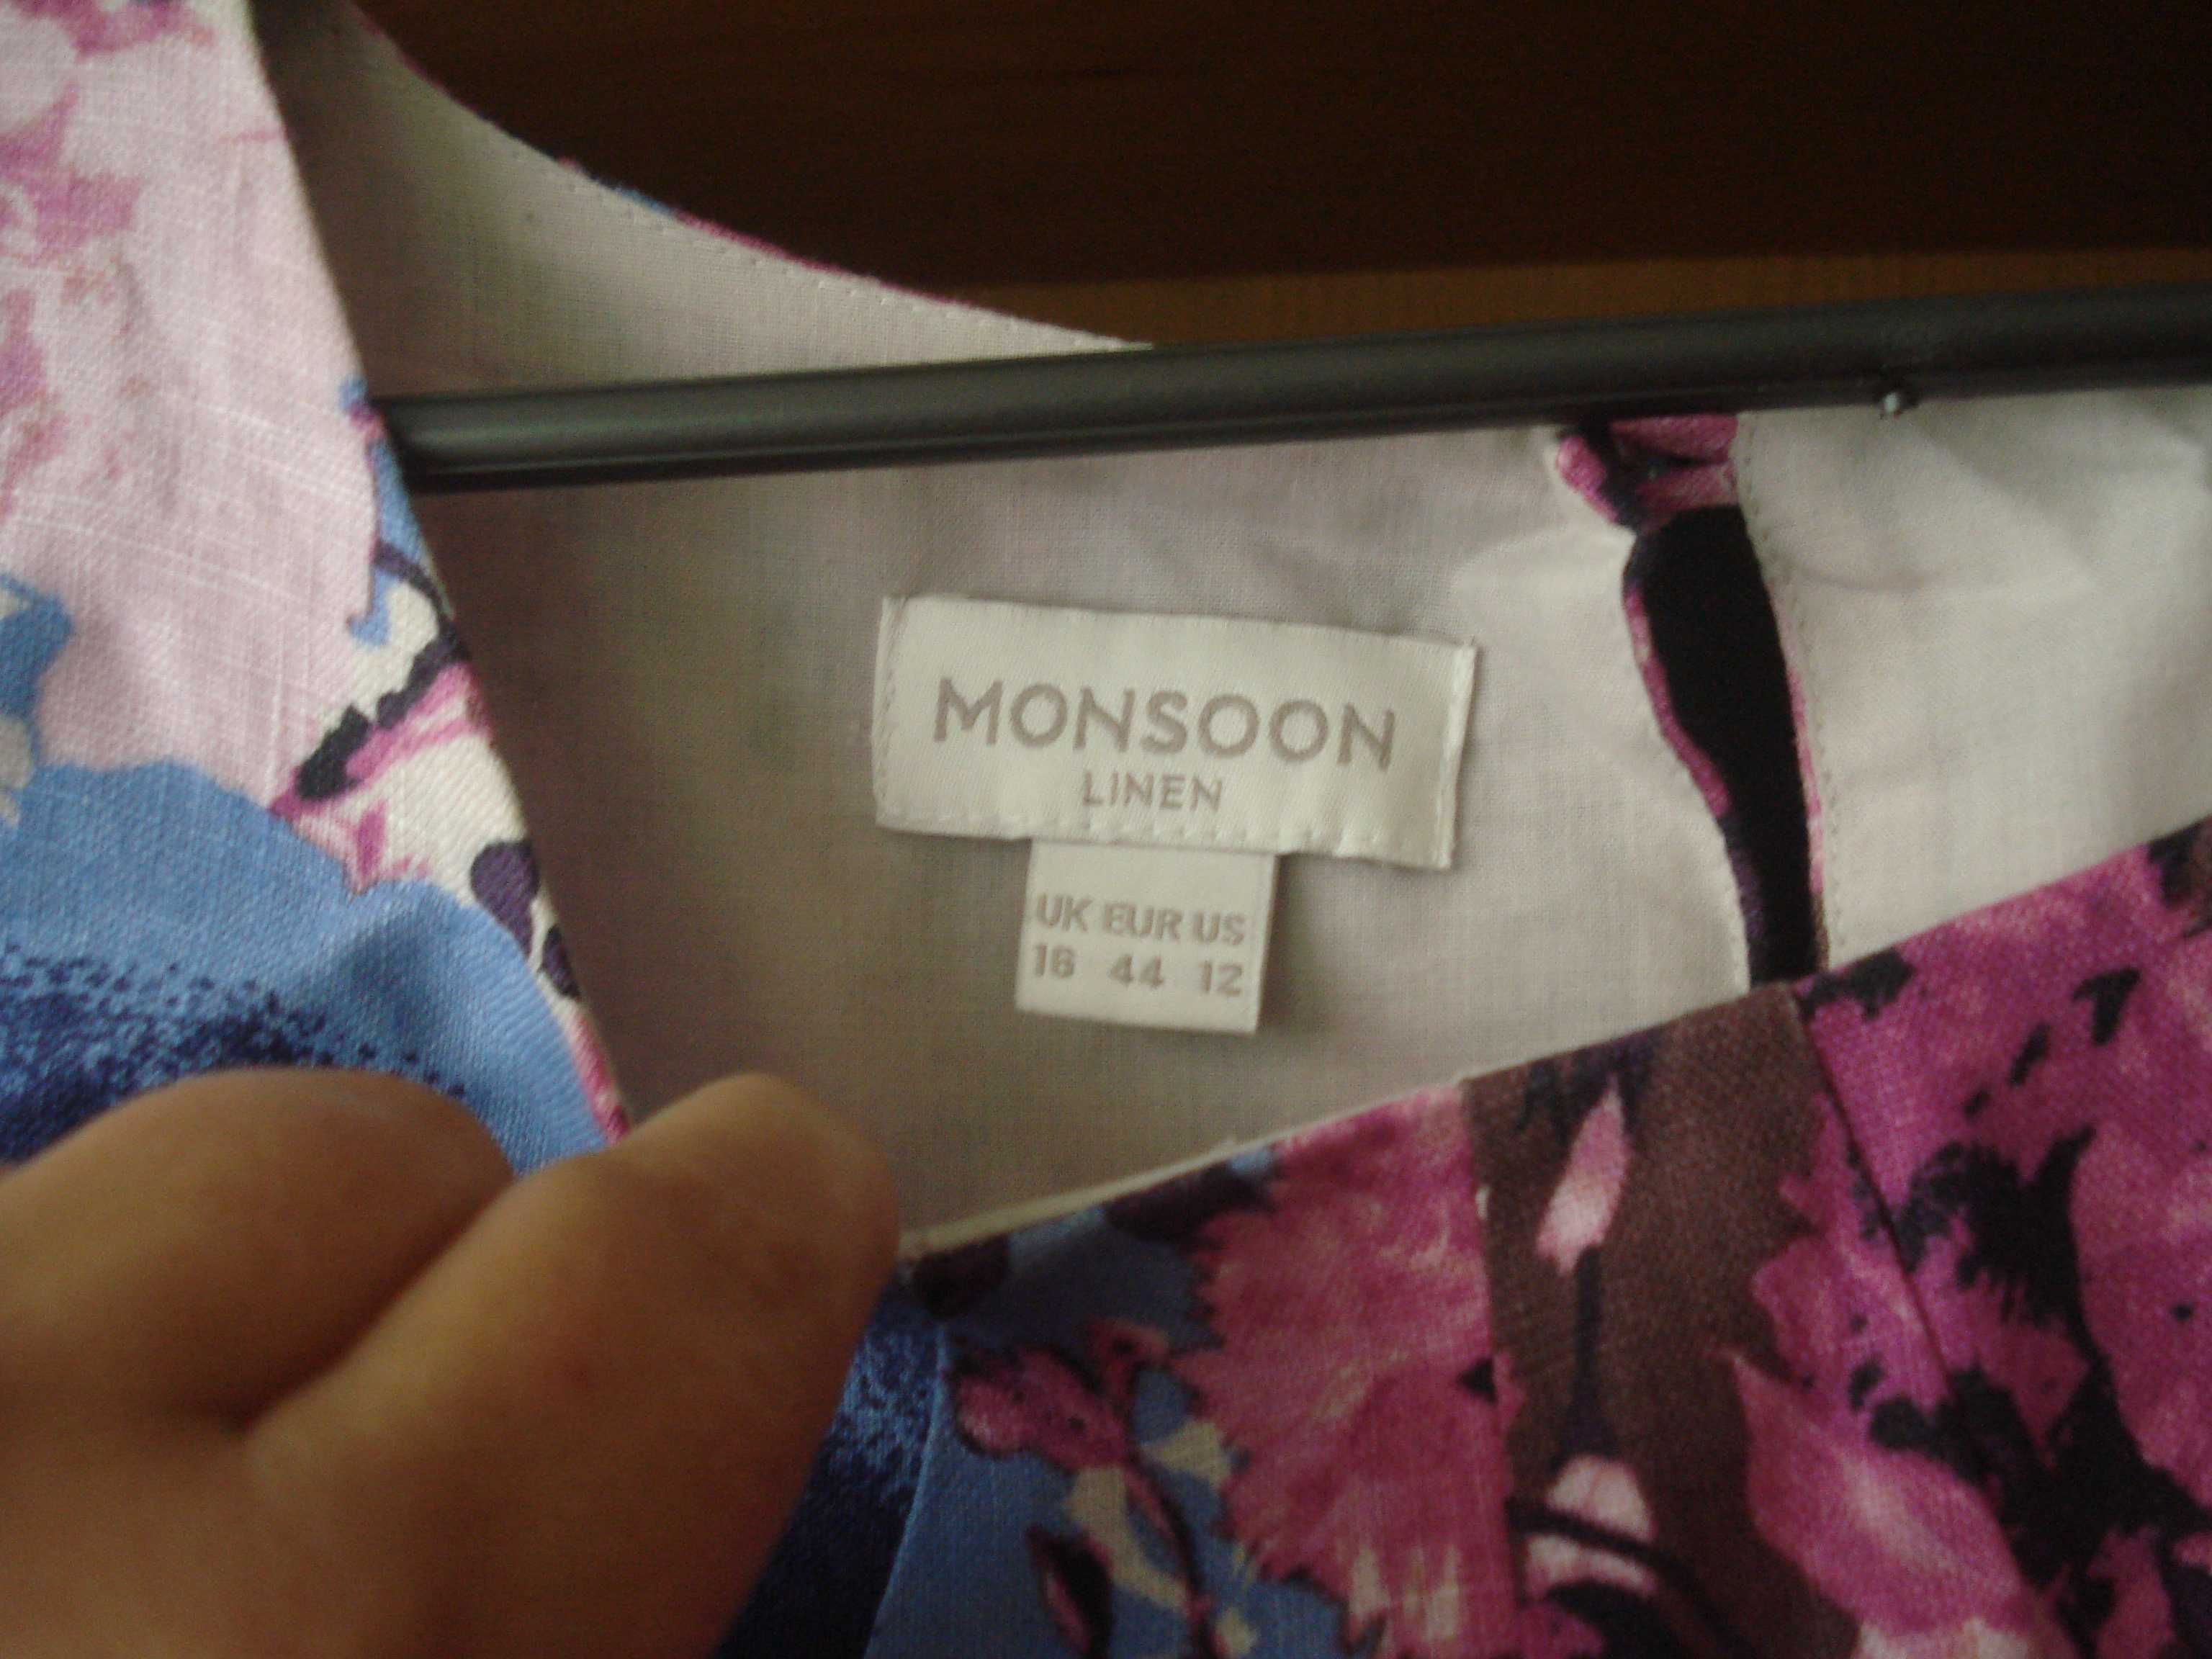 Monsoon-16/44 р. - брендовое летнее платье/сарафан 100% лен